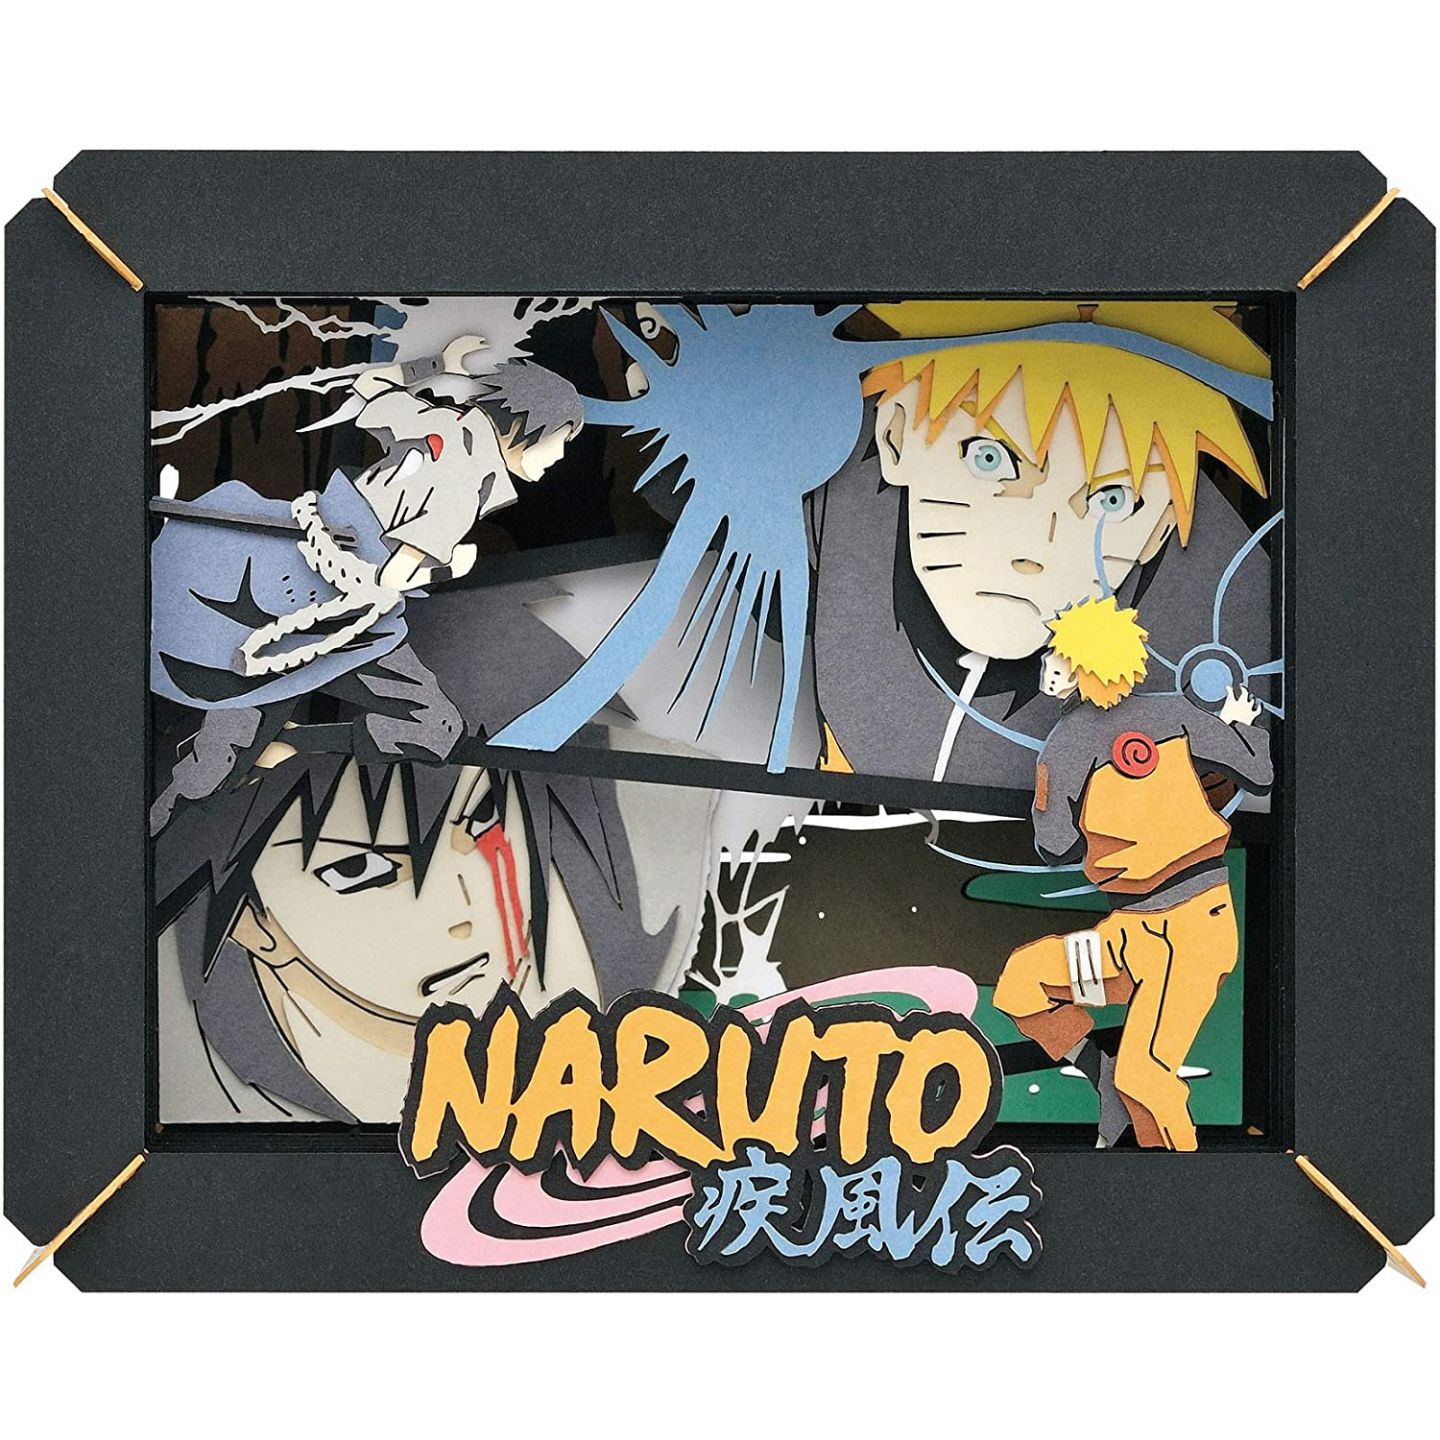 Ensky Paper Theater Pt 125 Naruto Naruto Vs Sasuke